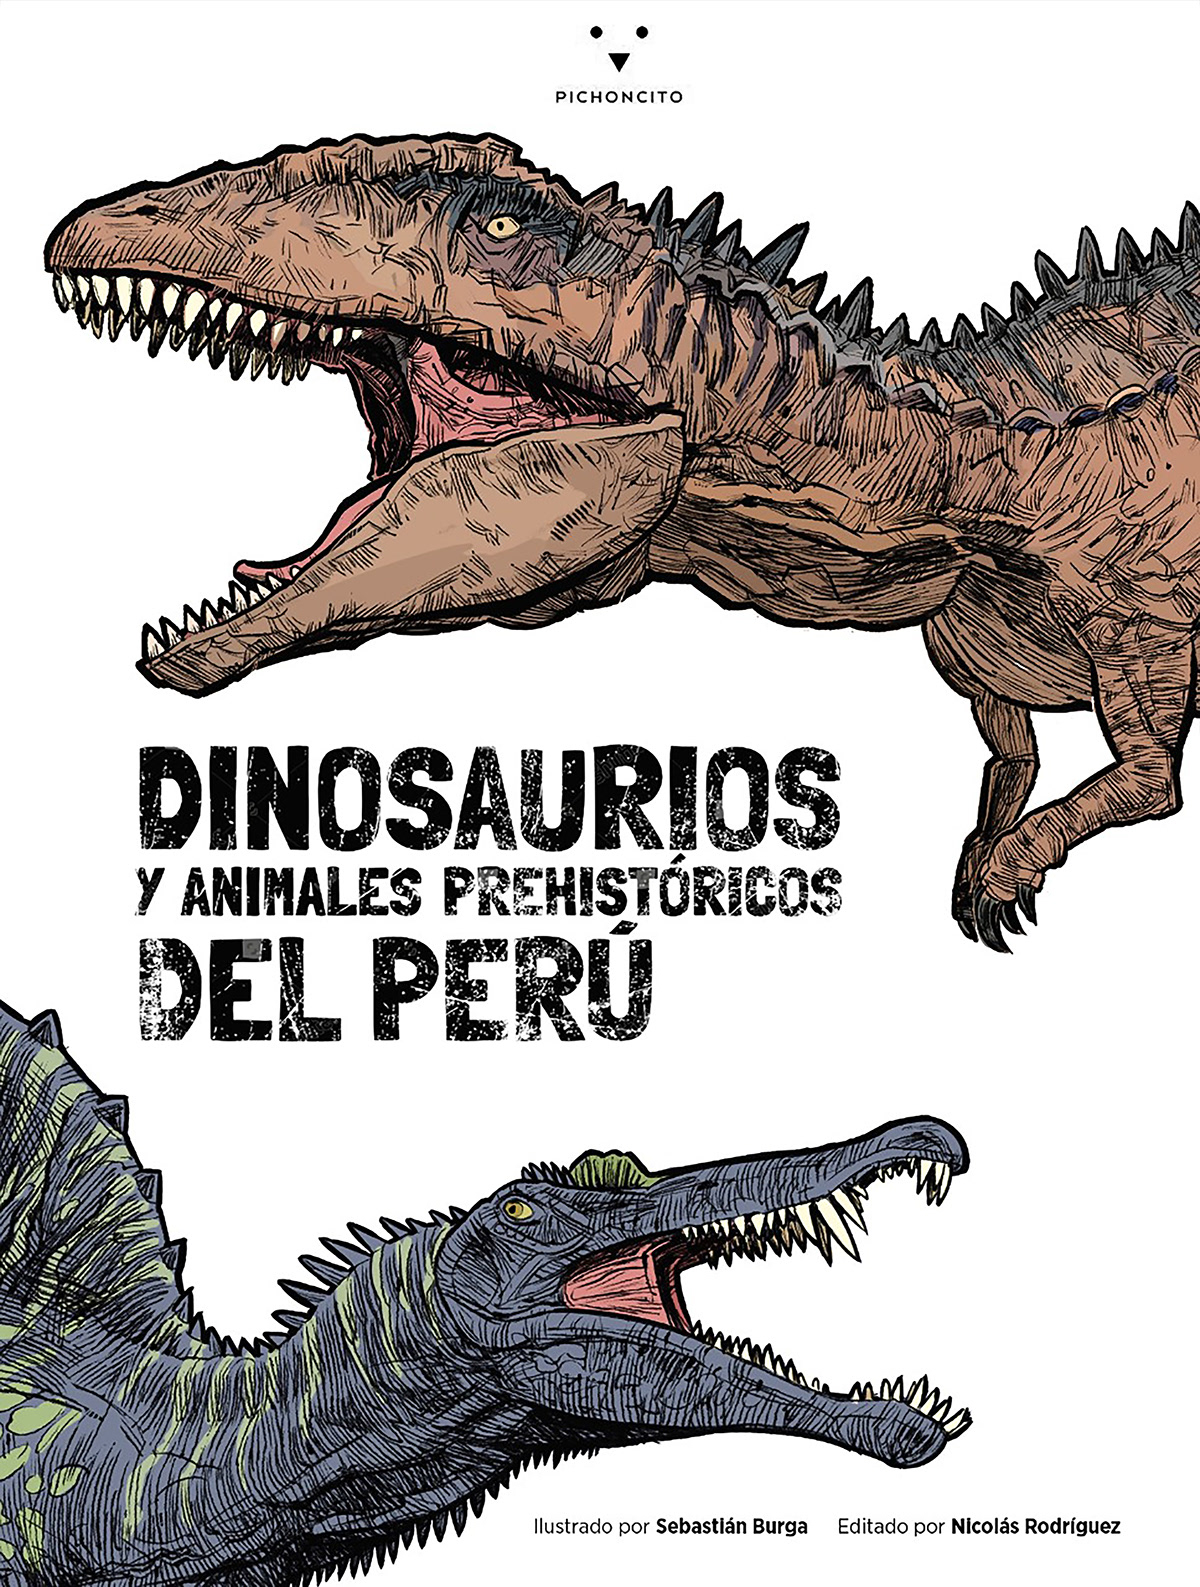 book comic Dinosaur dinosaurs Editorial Illustration educational ILLUSTRATION  peru photoshop reptile